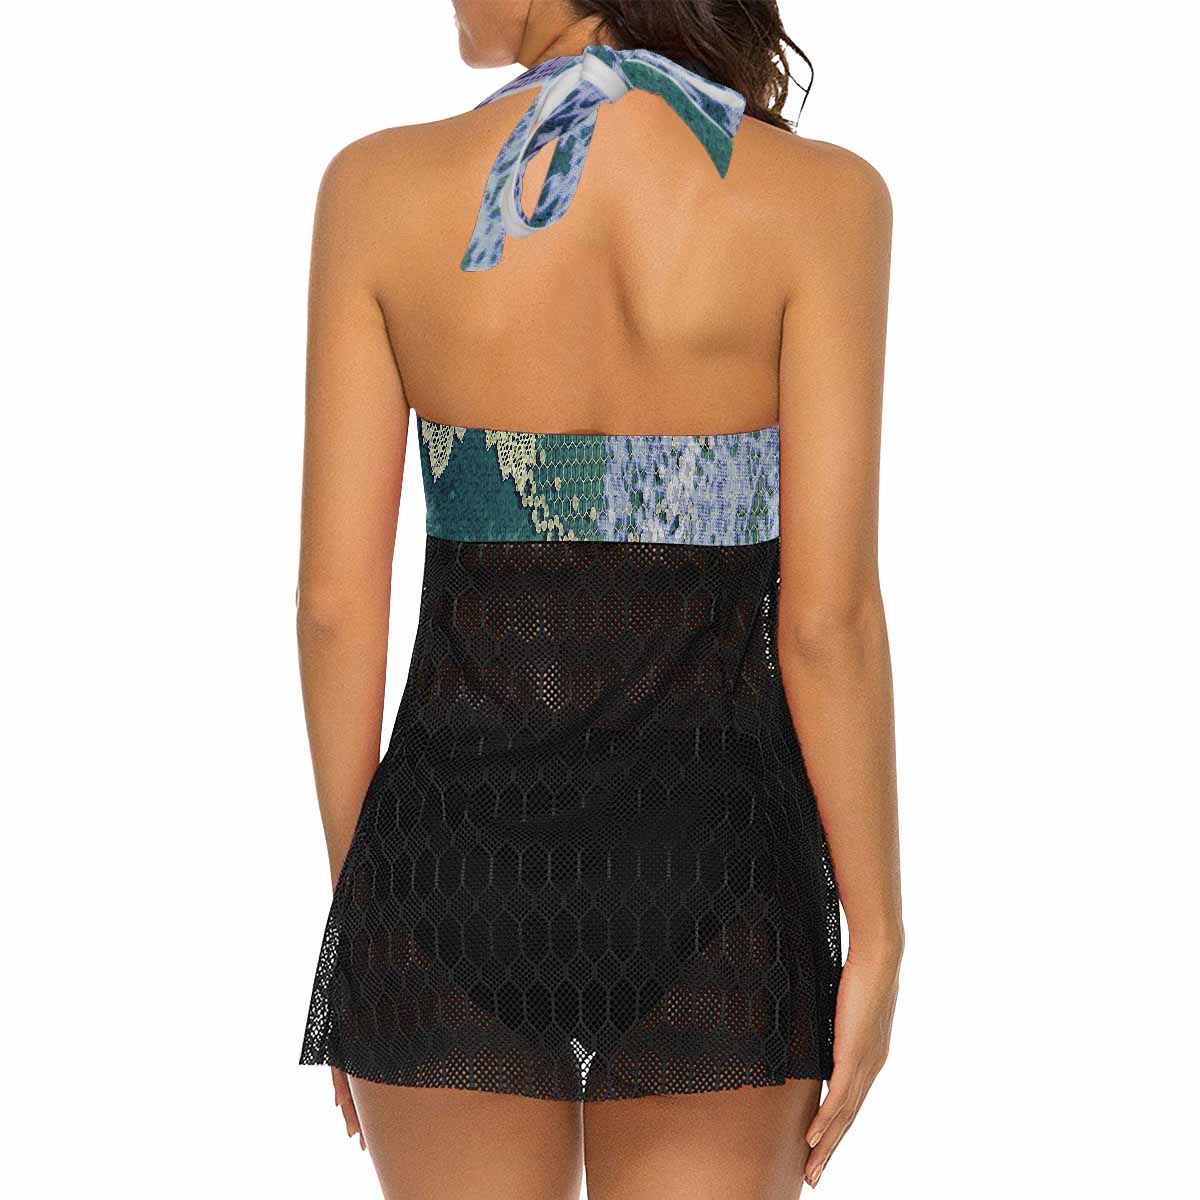 Bikini & cover up top swim wear, Printed Victorian lace design 05